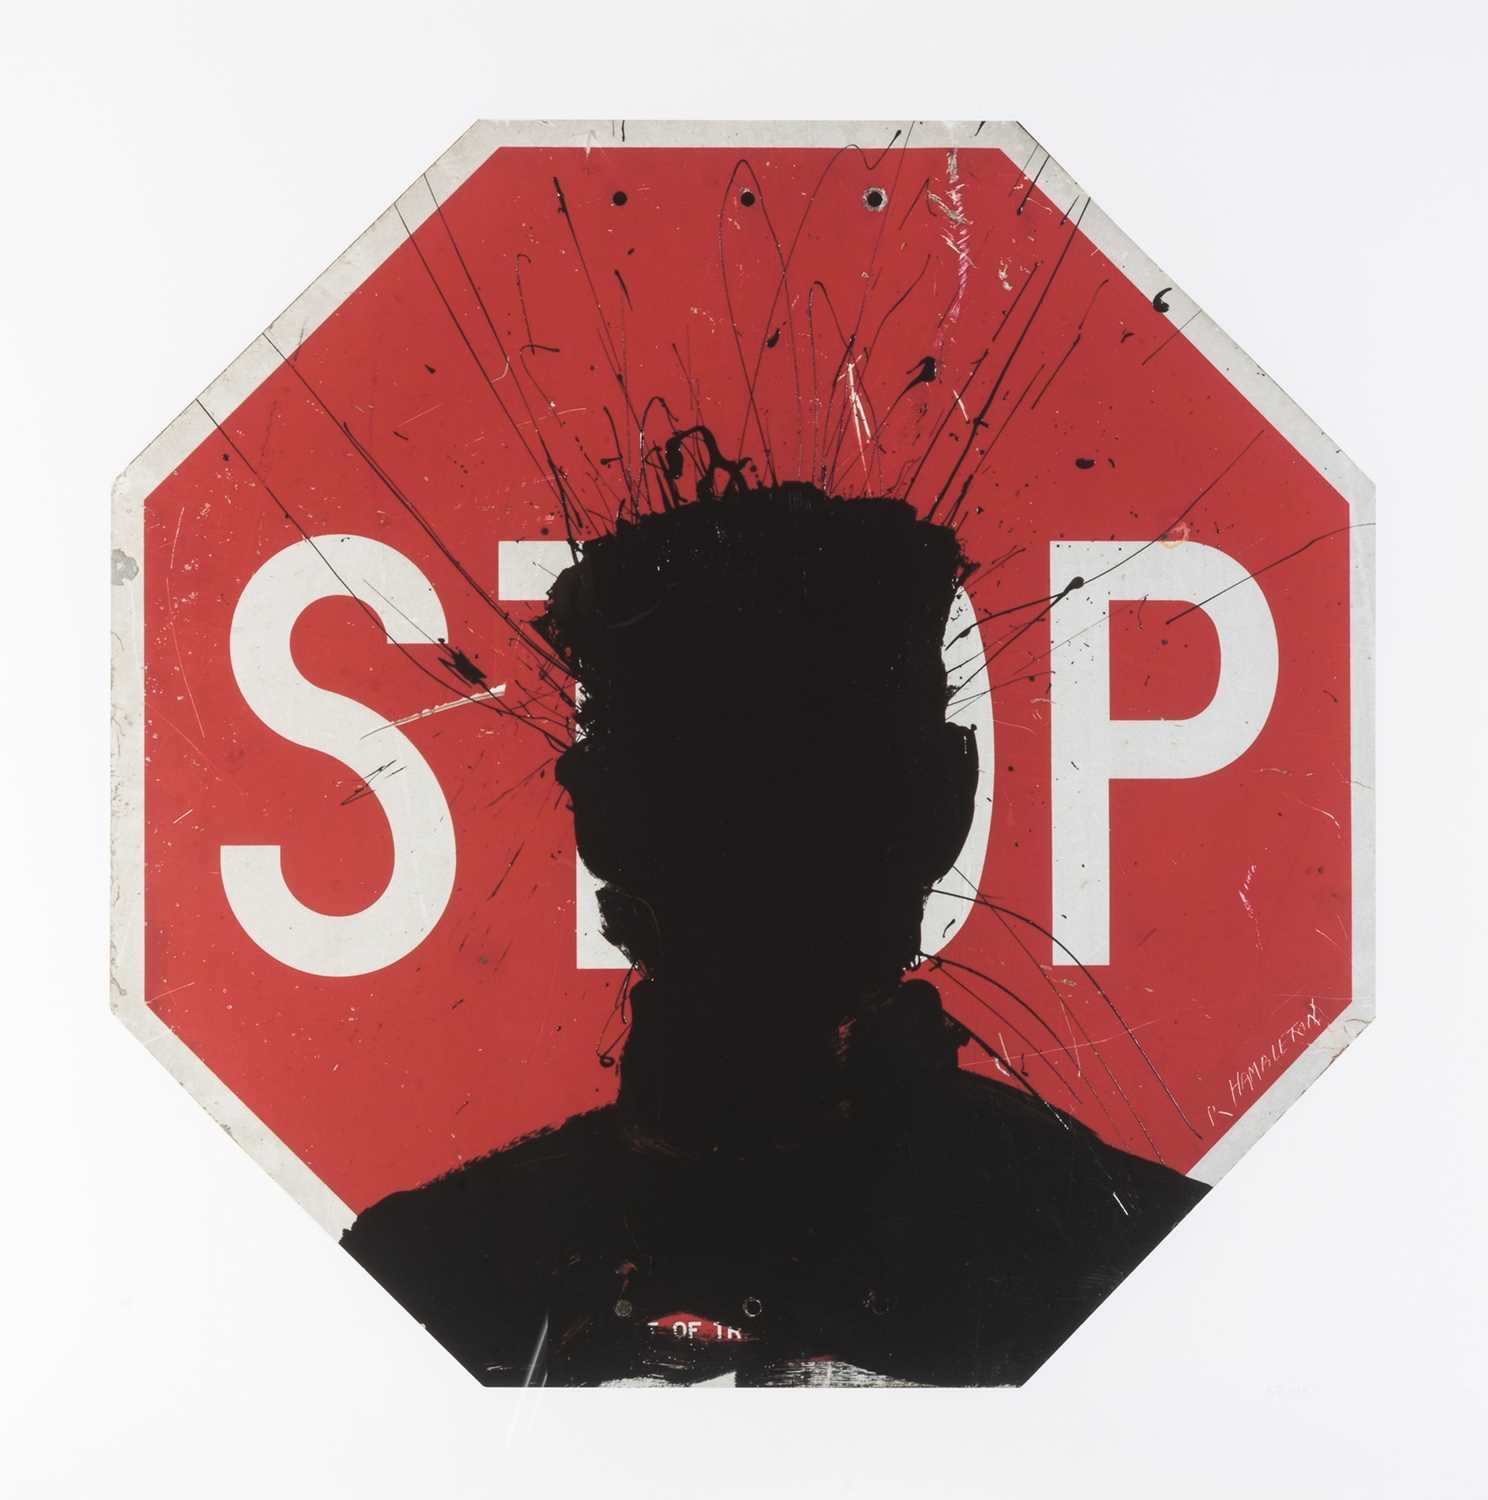 Lot 295 - Richard Hambleton (Canadian 1952-2017), 'Stop Sign', 2018